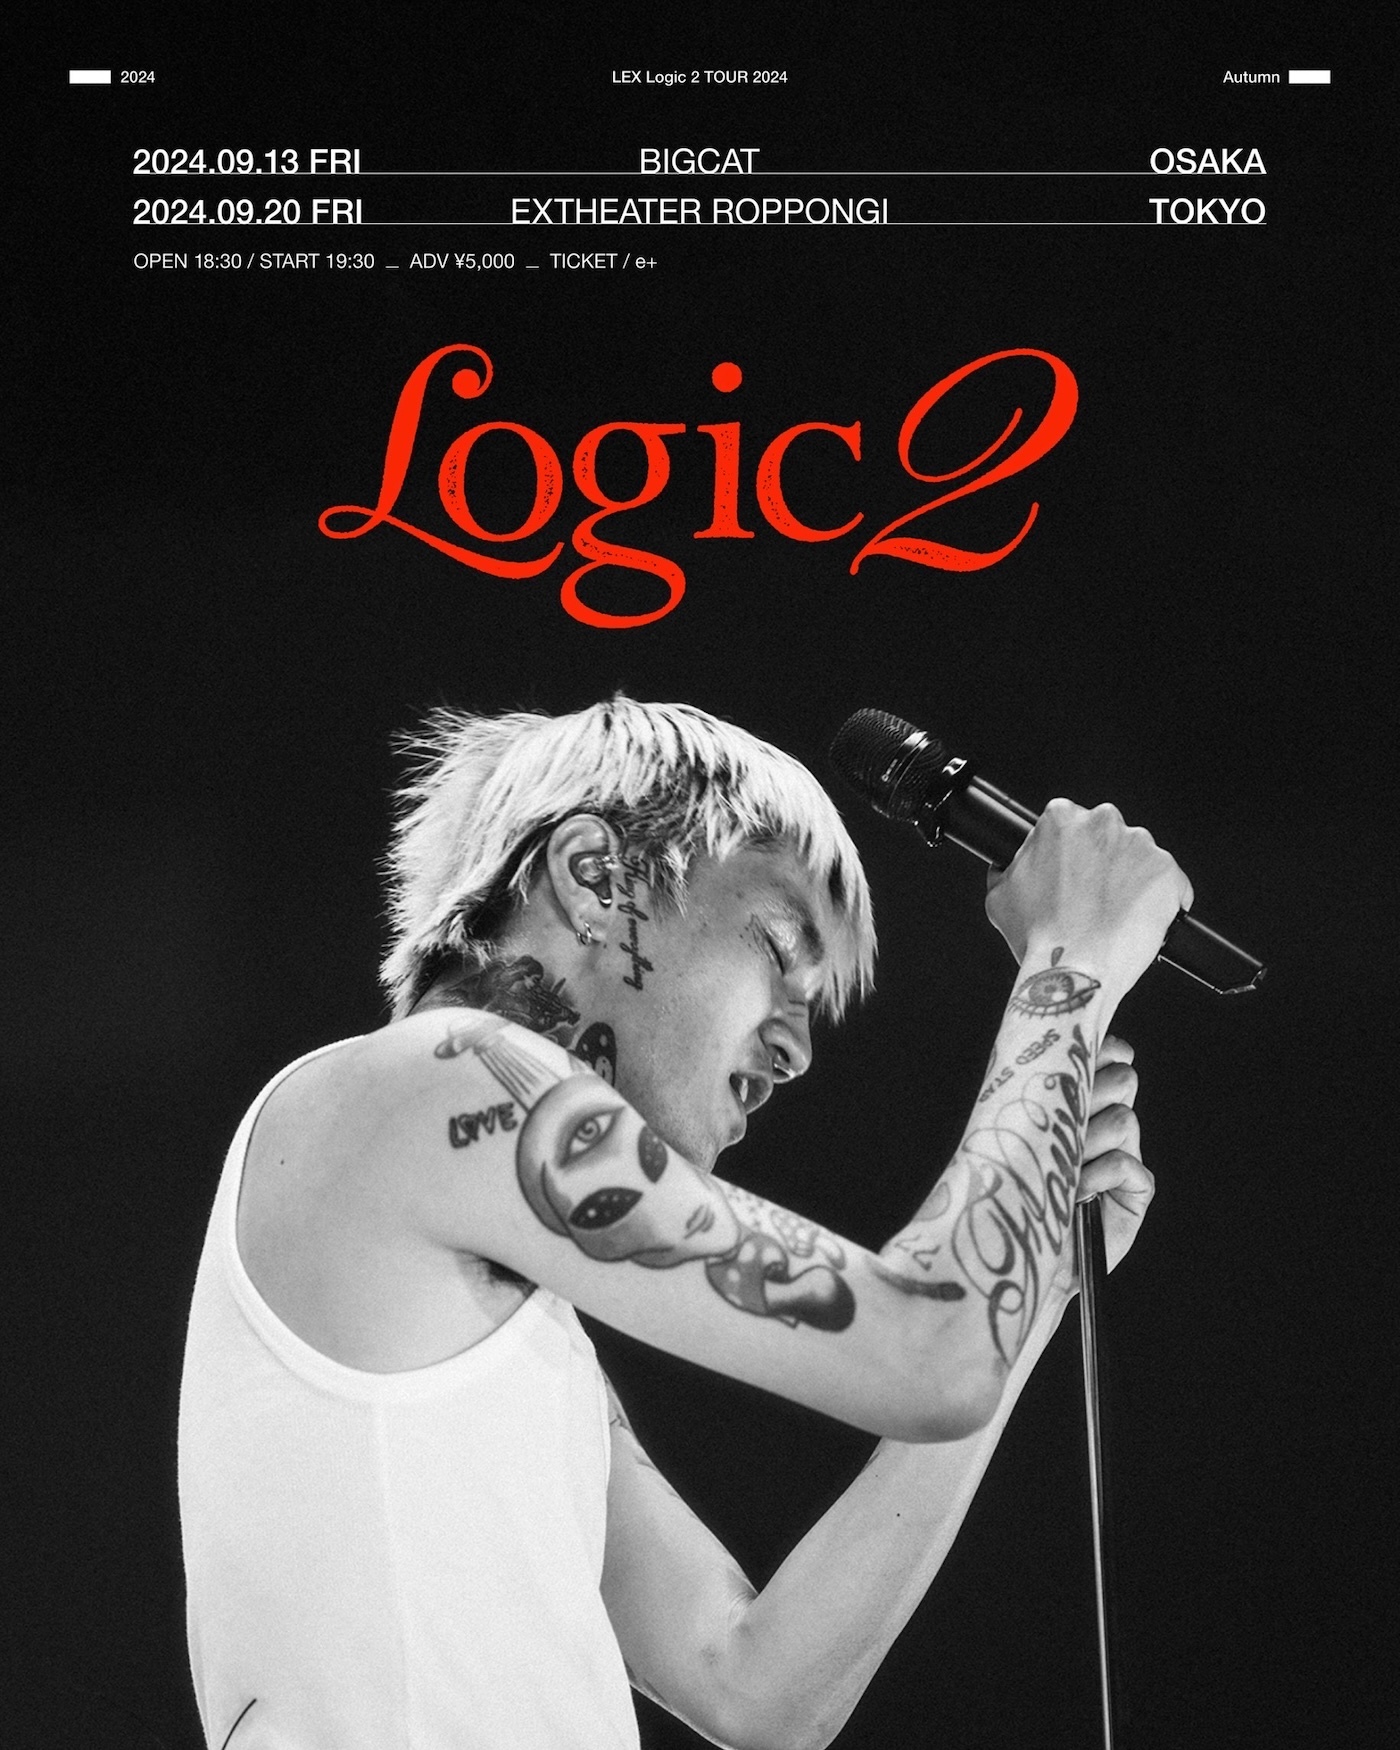 LEX Logic 2 Tour 2024